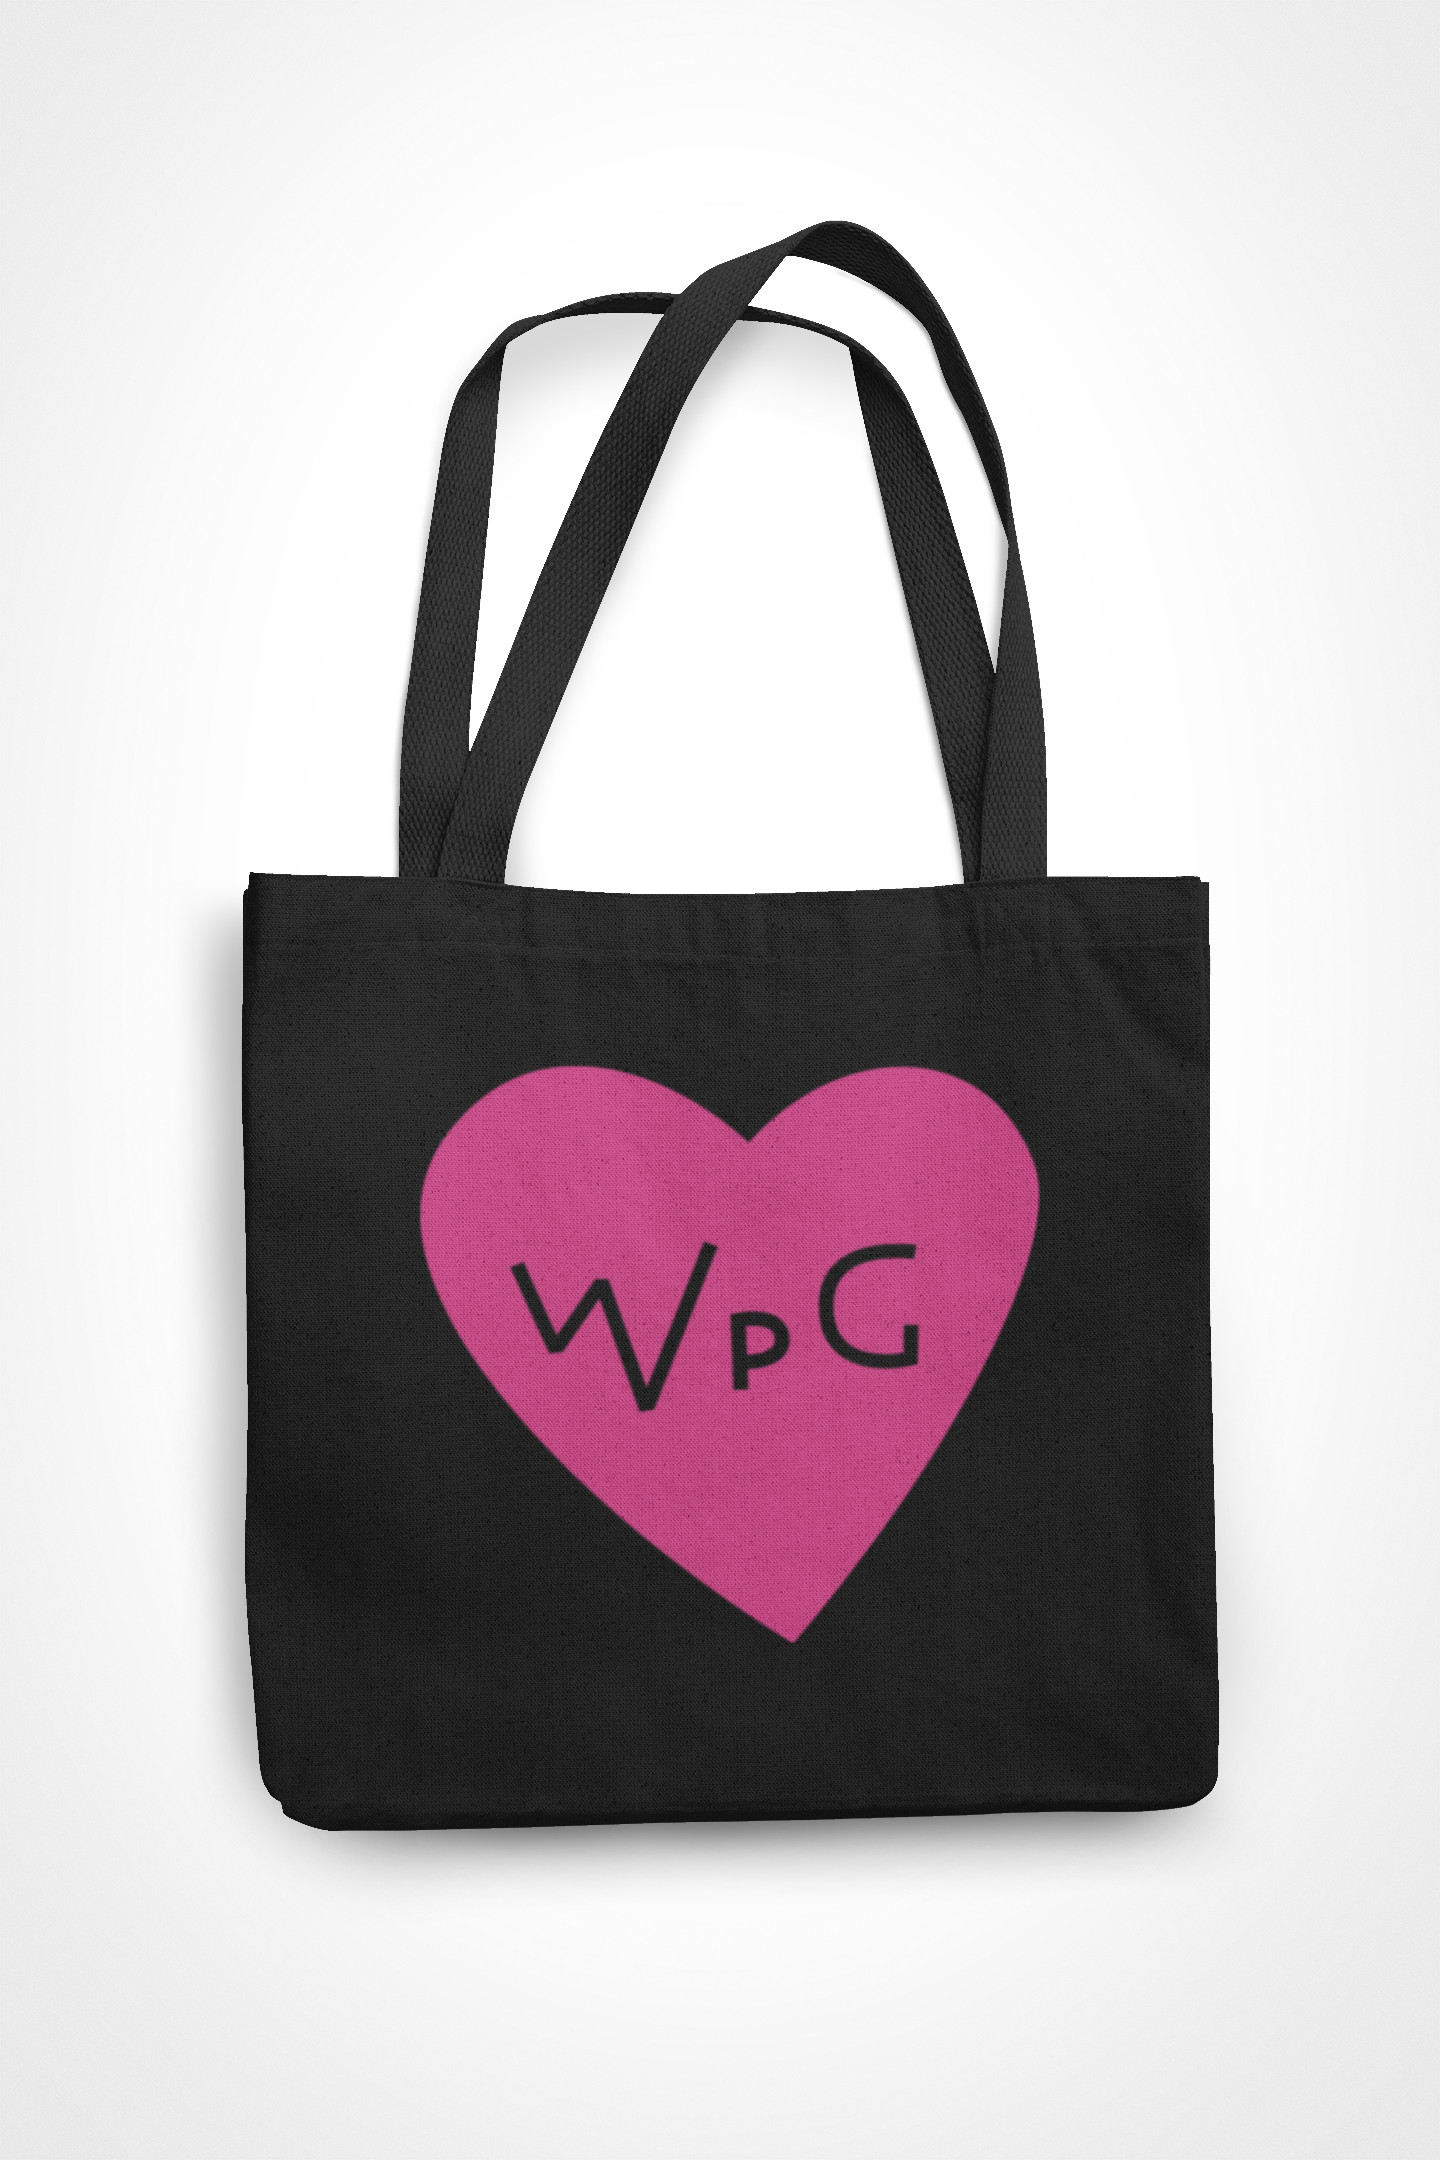 WPG Heart Tote | Pink on Black